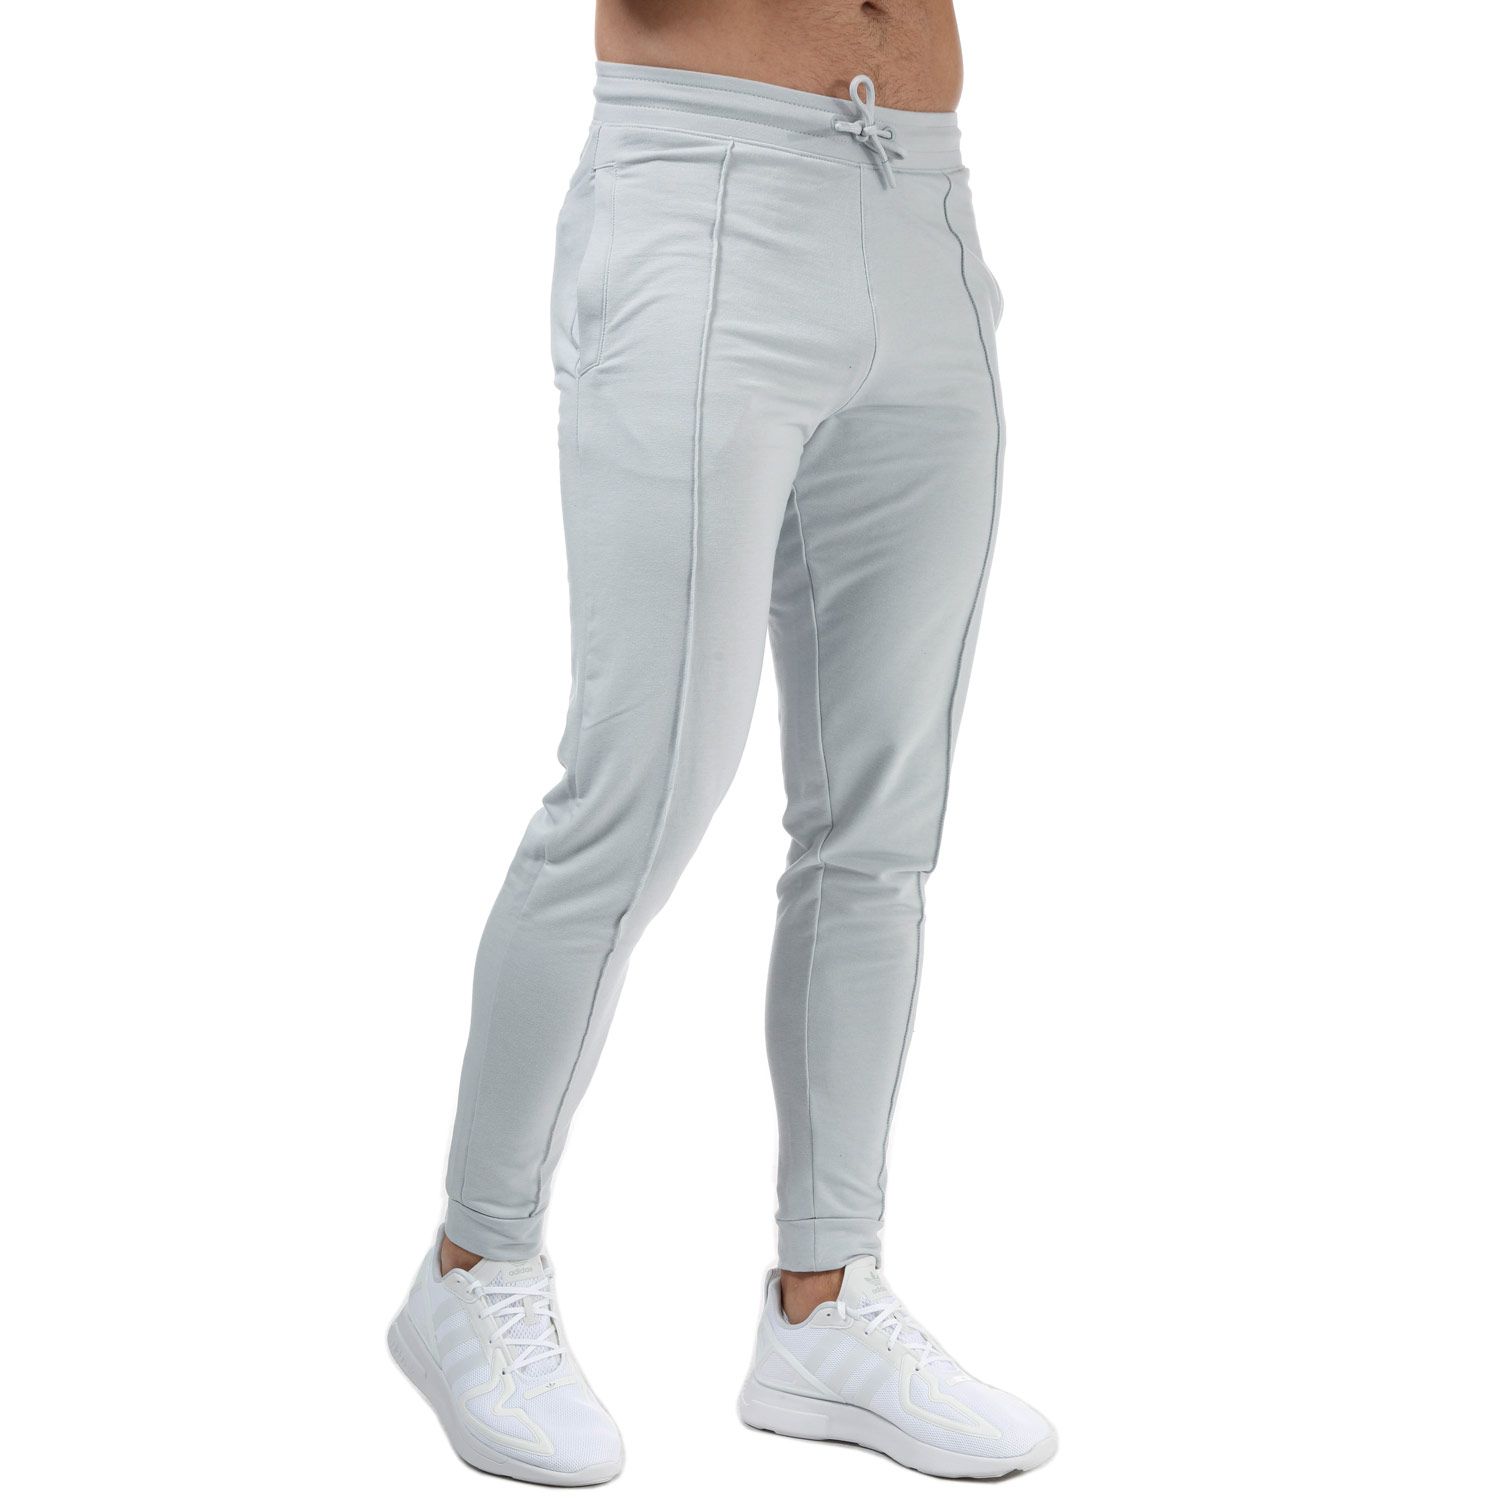 Free Soul slacks discount 68% Gray 38                  EU WOMEN FASHION Trousers Slacks Waxed 